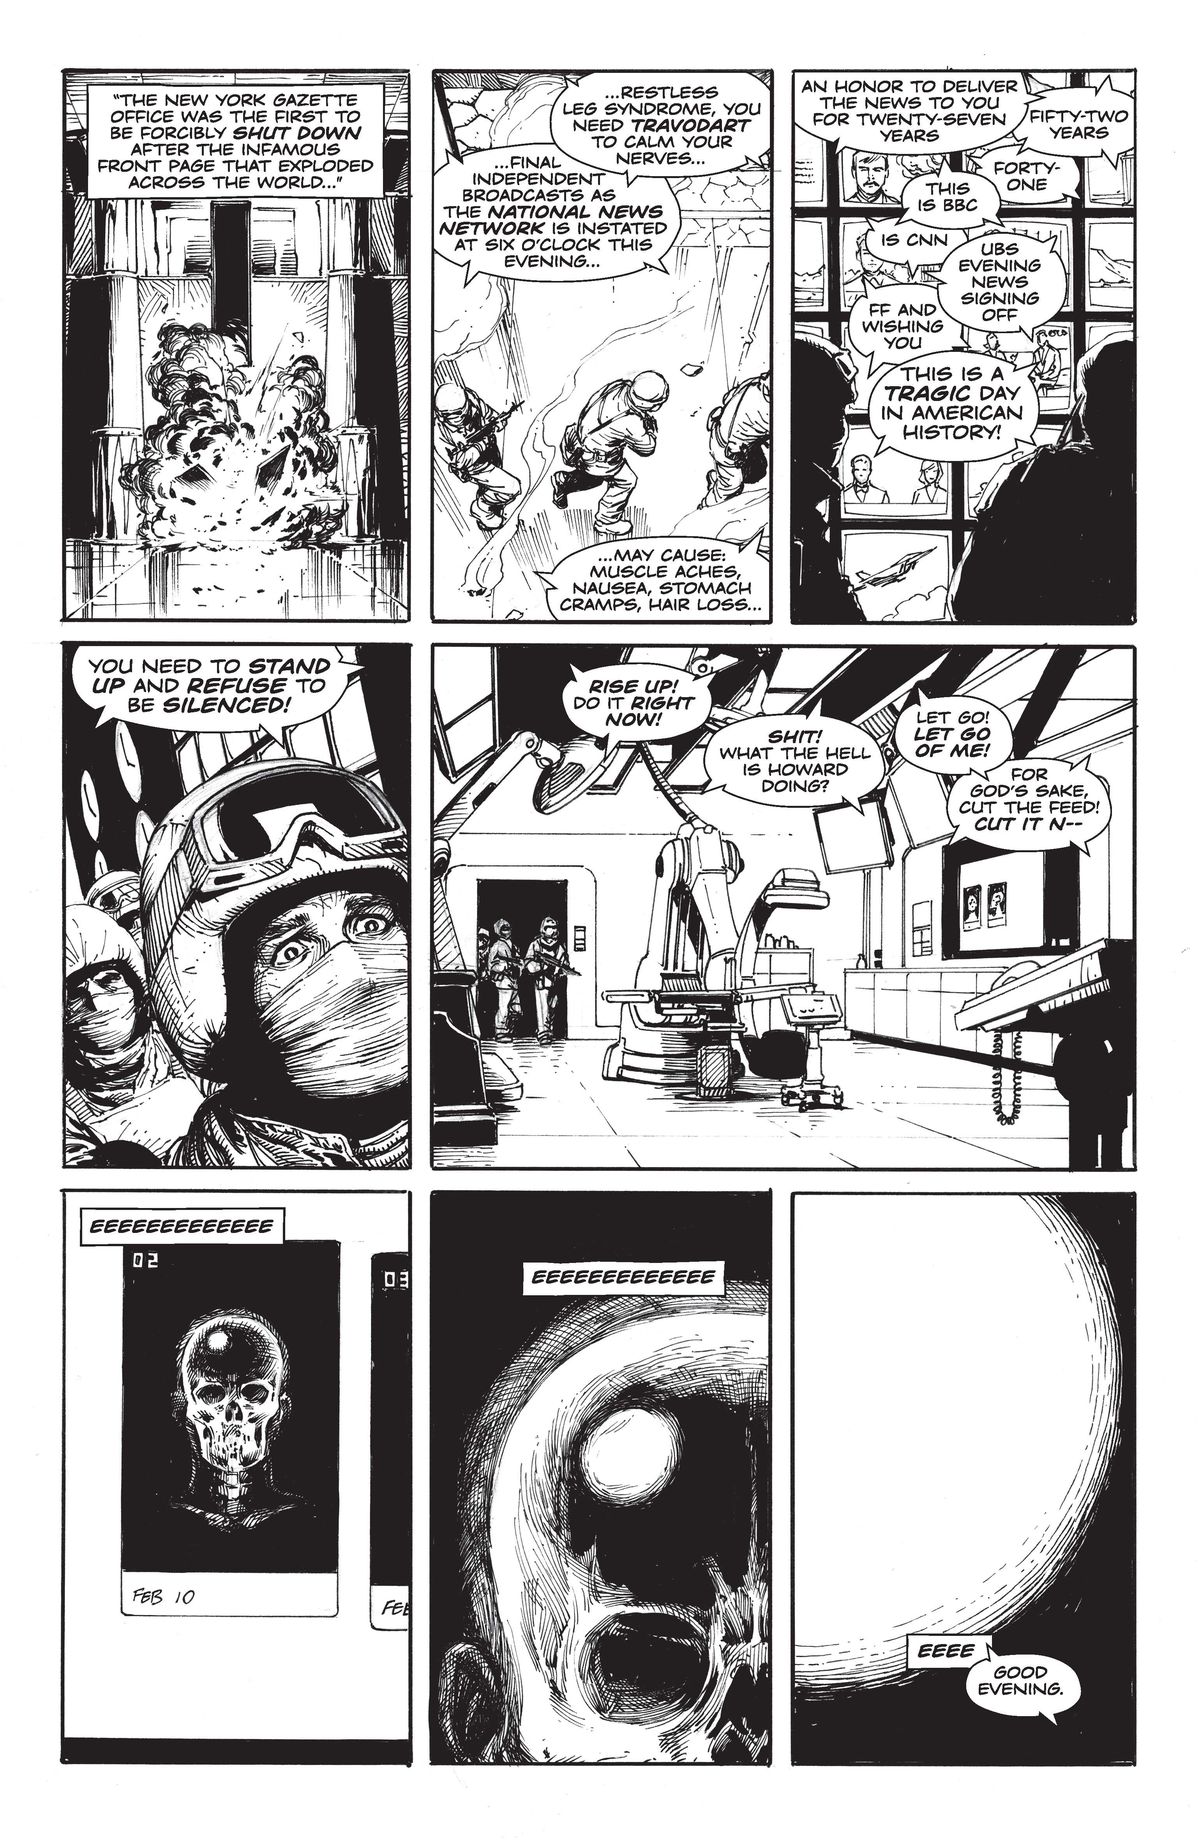 DC Comics’ Doomsday Clock #1, page 4, written by Geoff Loeb, drawn by Gary Frank.